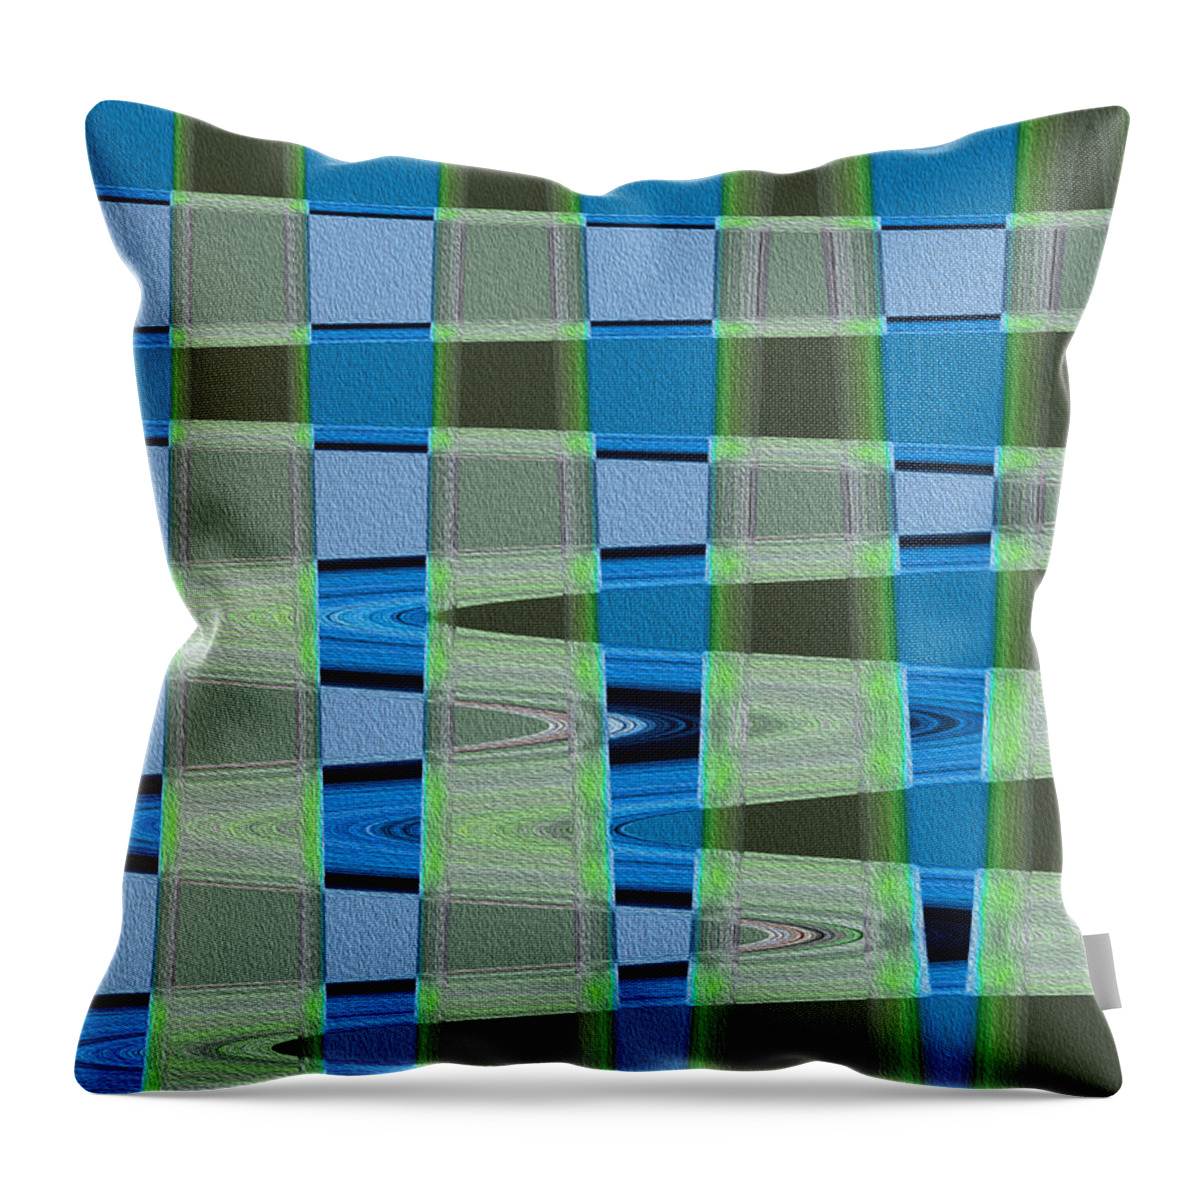 Non-euclidean Geometry Throw Pillow featuring the painting Non-Euclidean Geometry by Julie Niemela